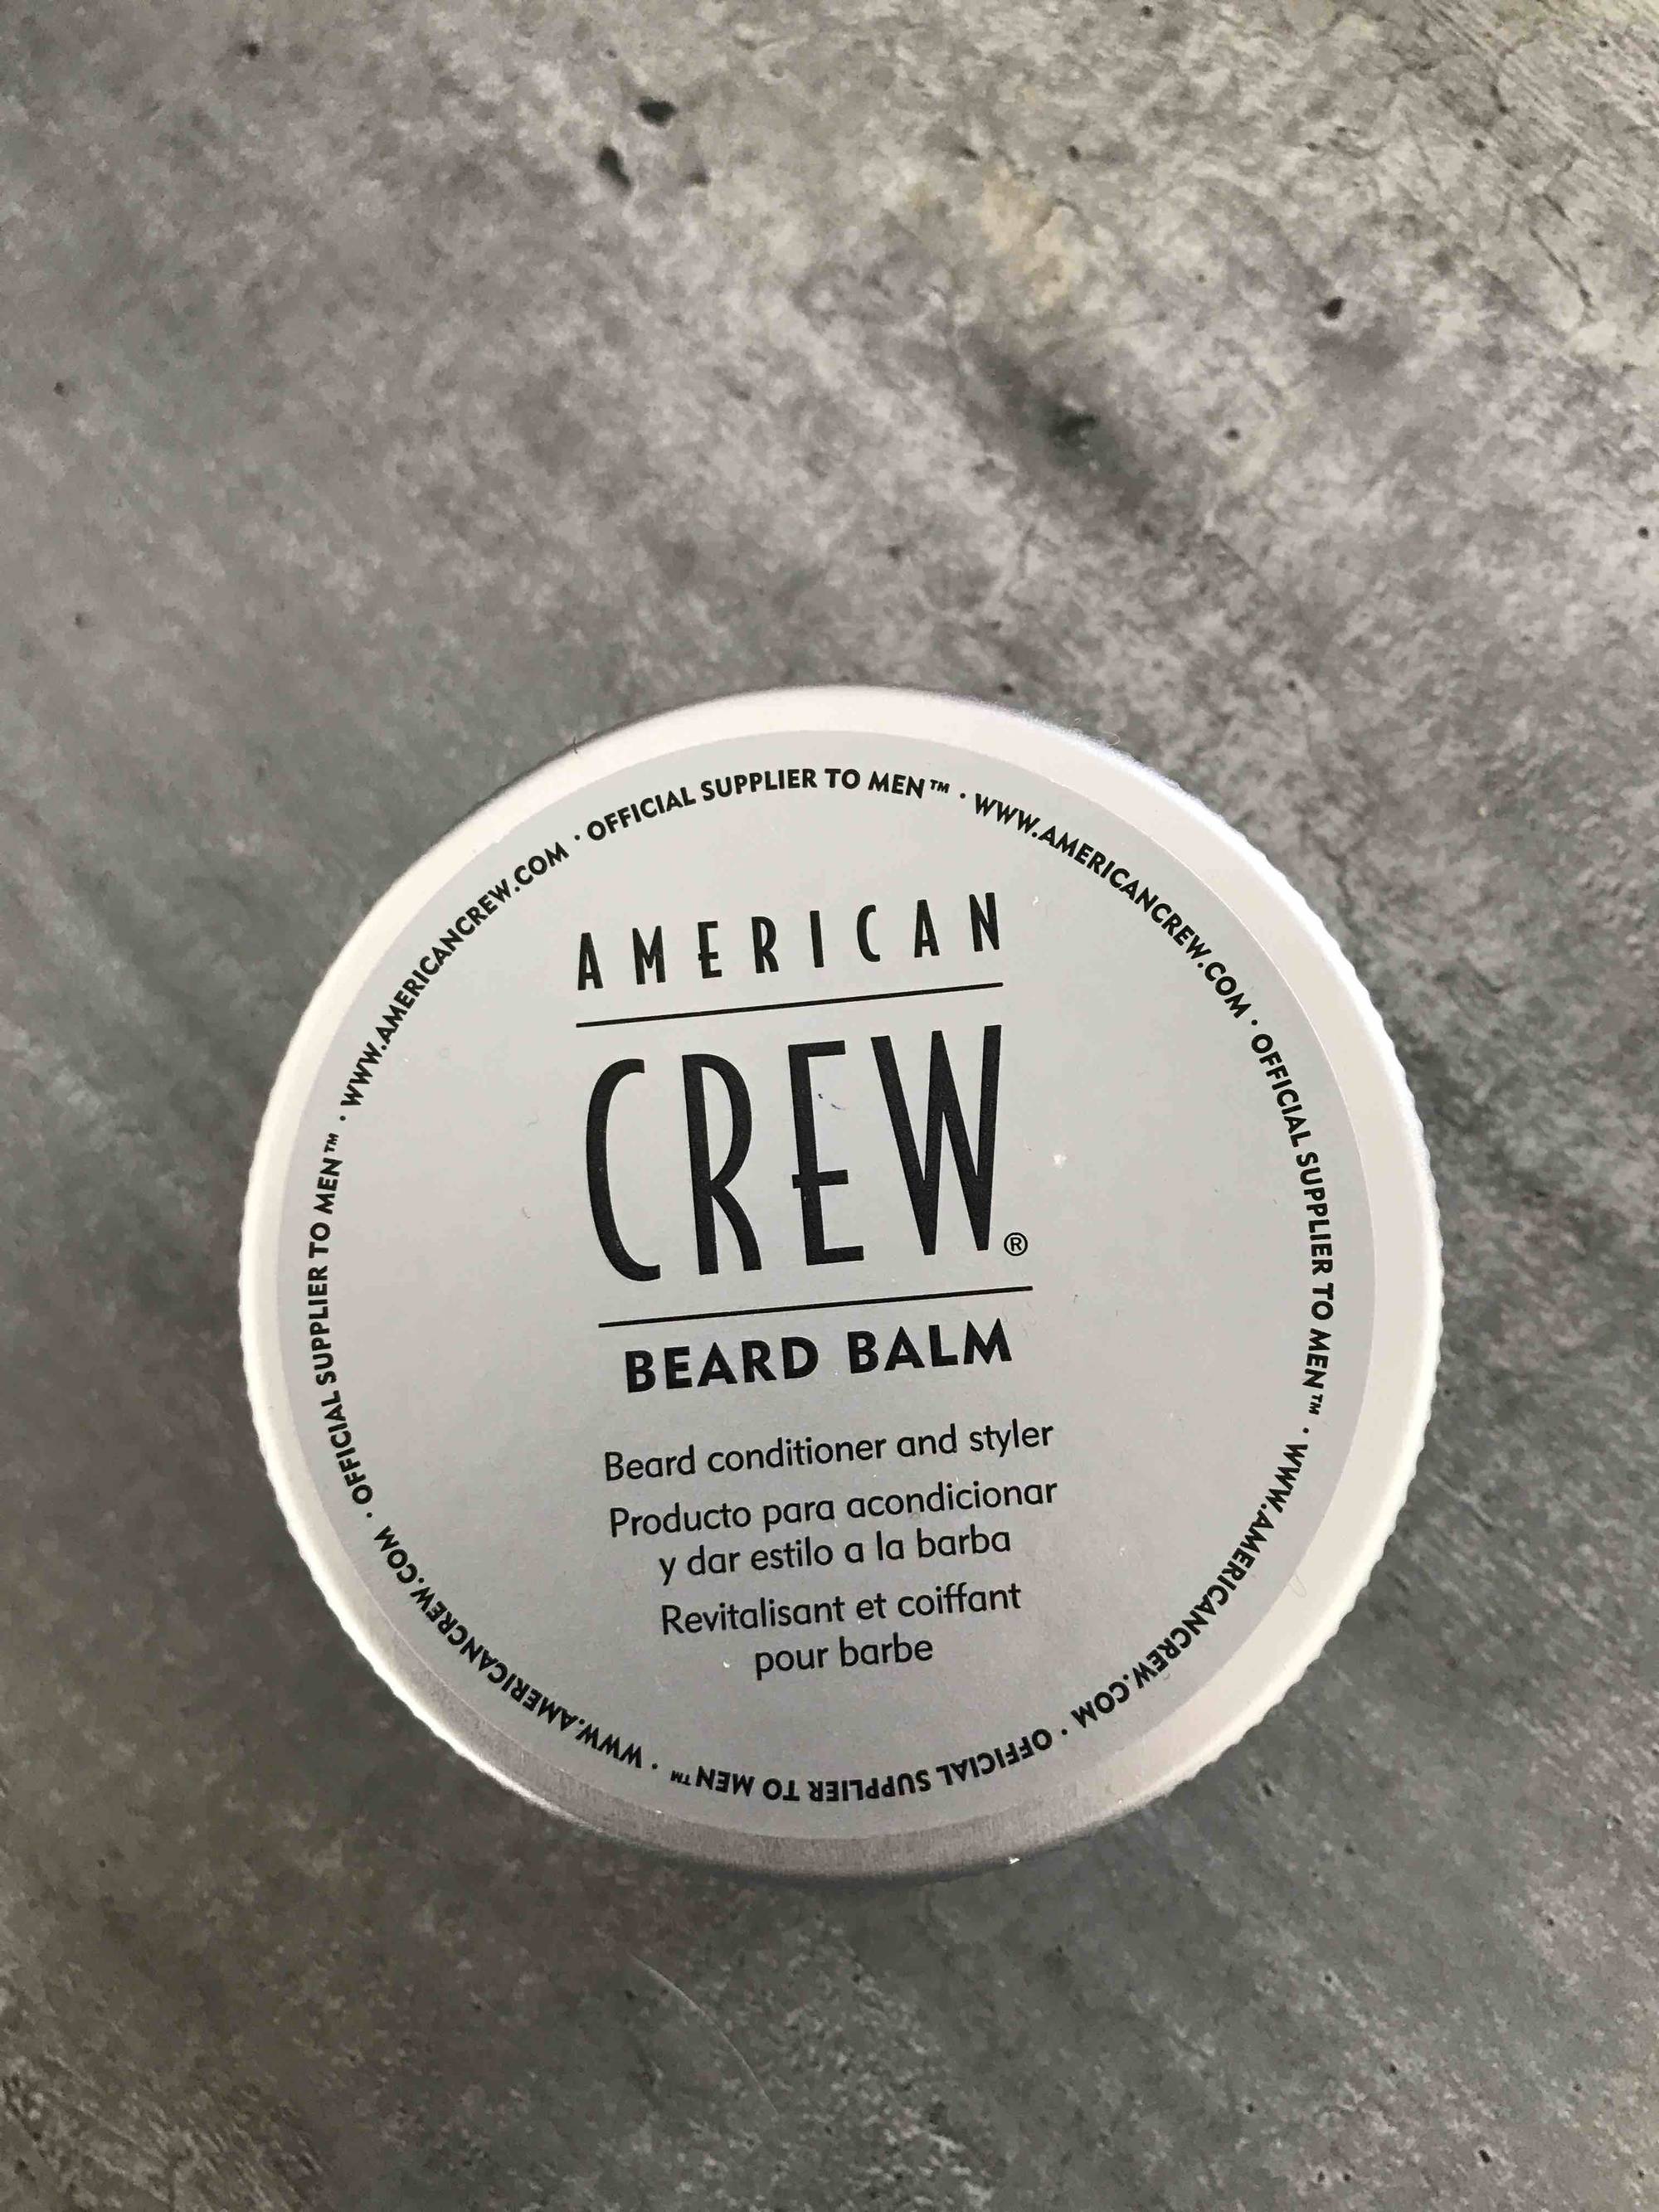 AMERICAN CREW - Beard balm - Revitalisant et coiffant pour barbe